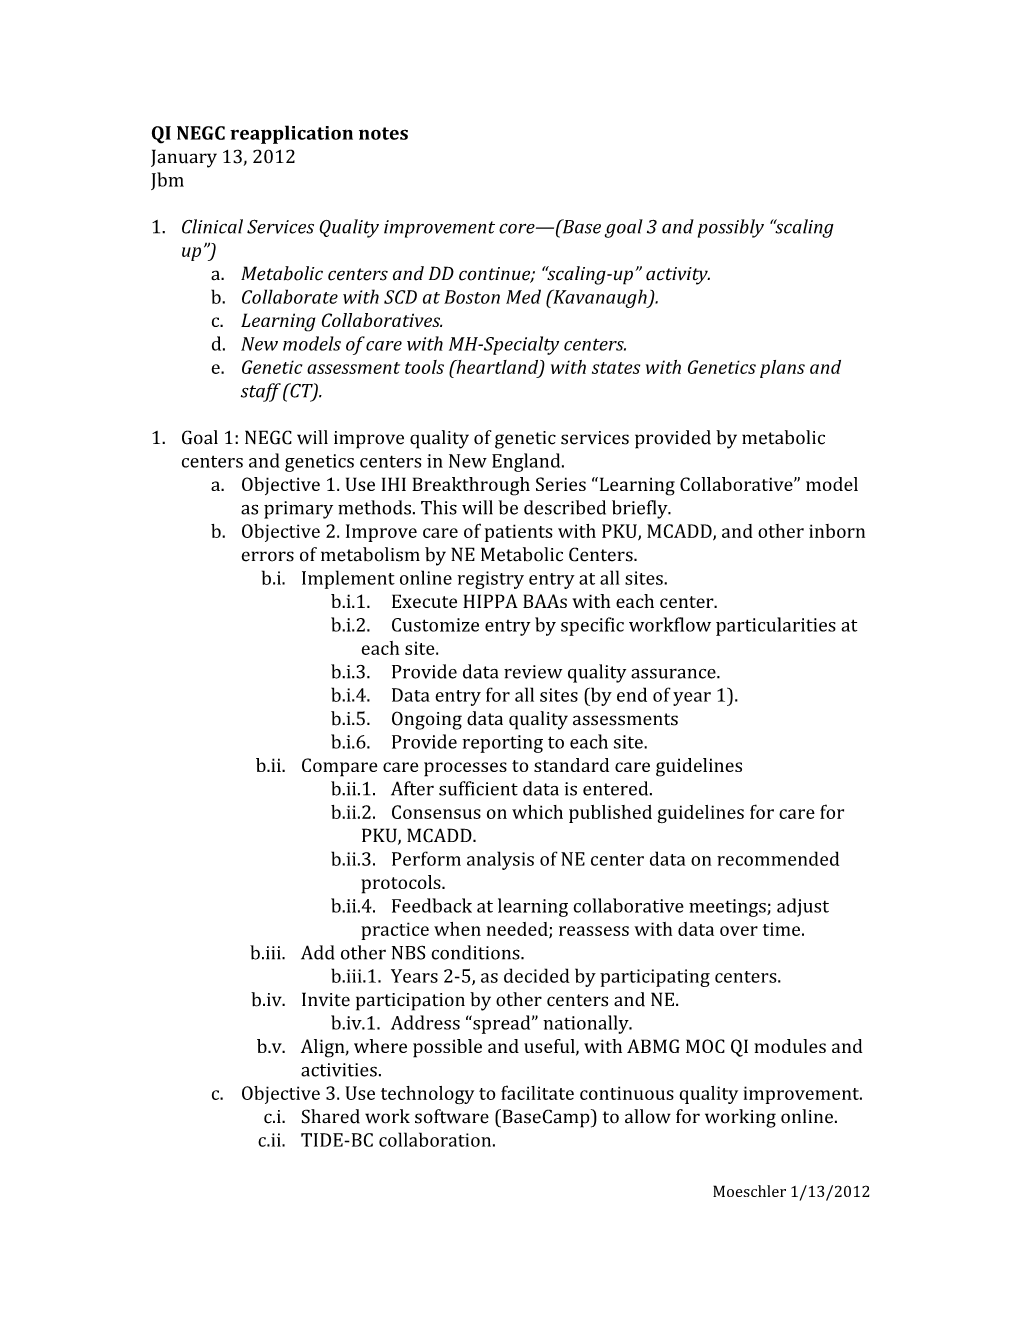 QI NEGC Reapplication Notes